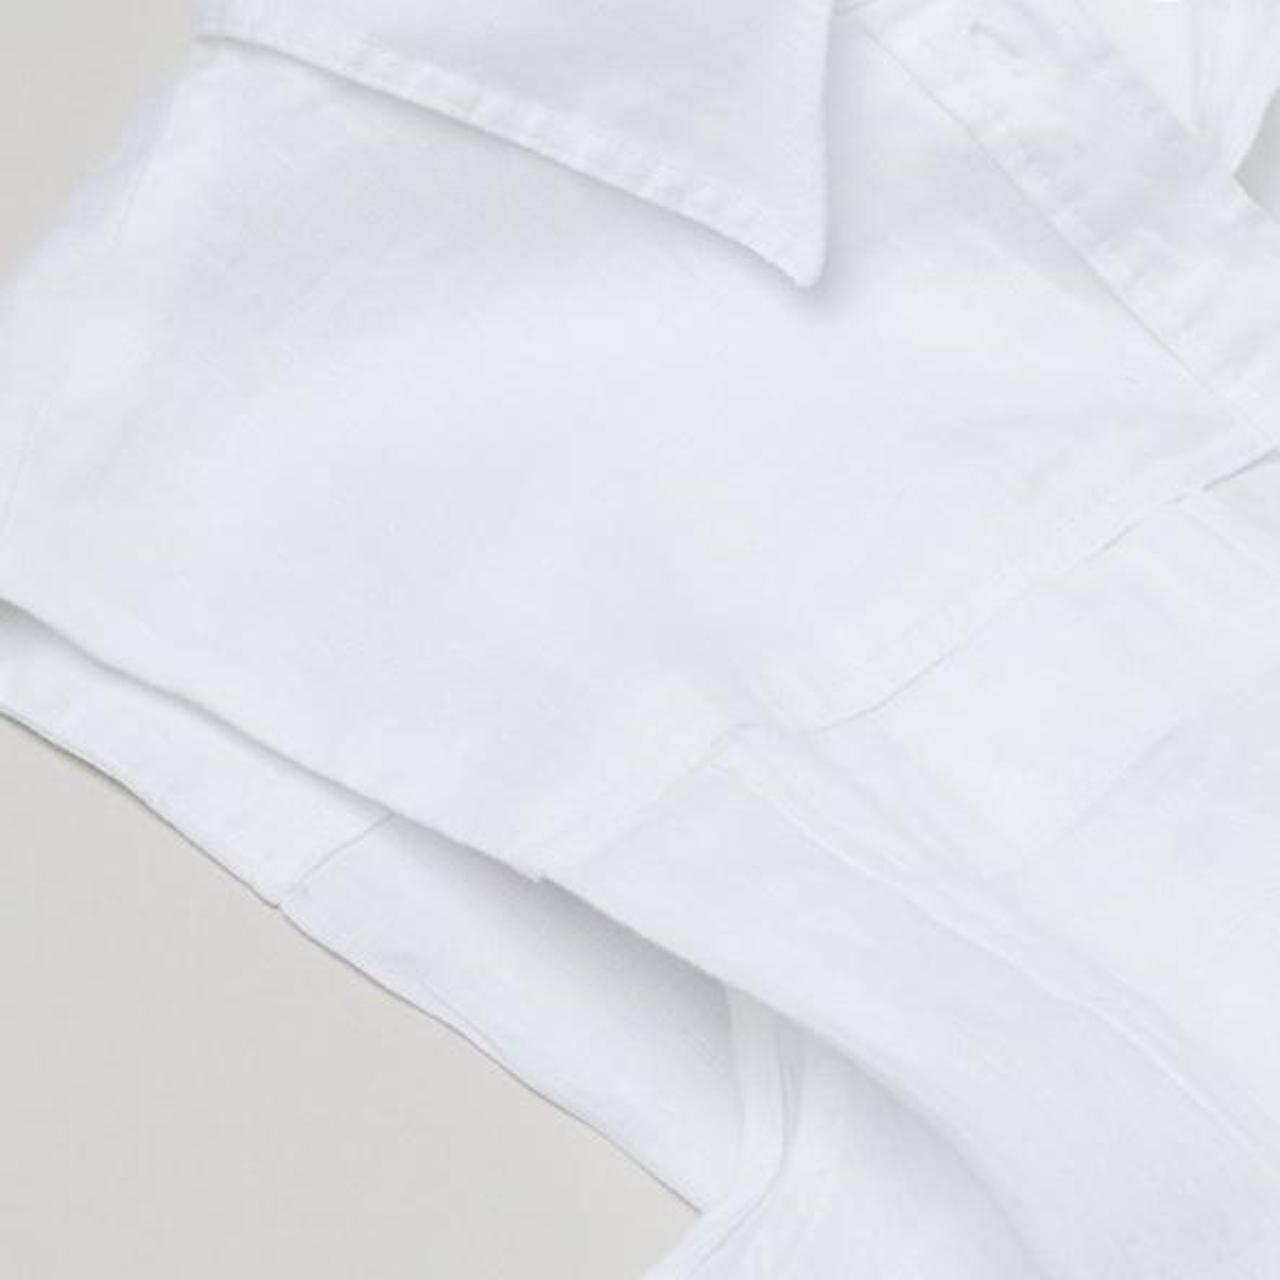 H&M white linen sleeveless blouse / shirt size S /... - Depop